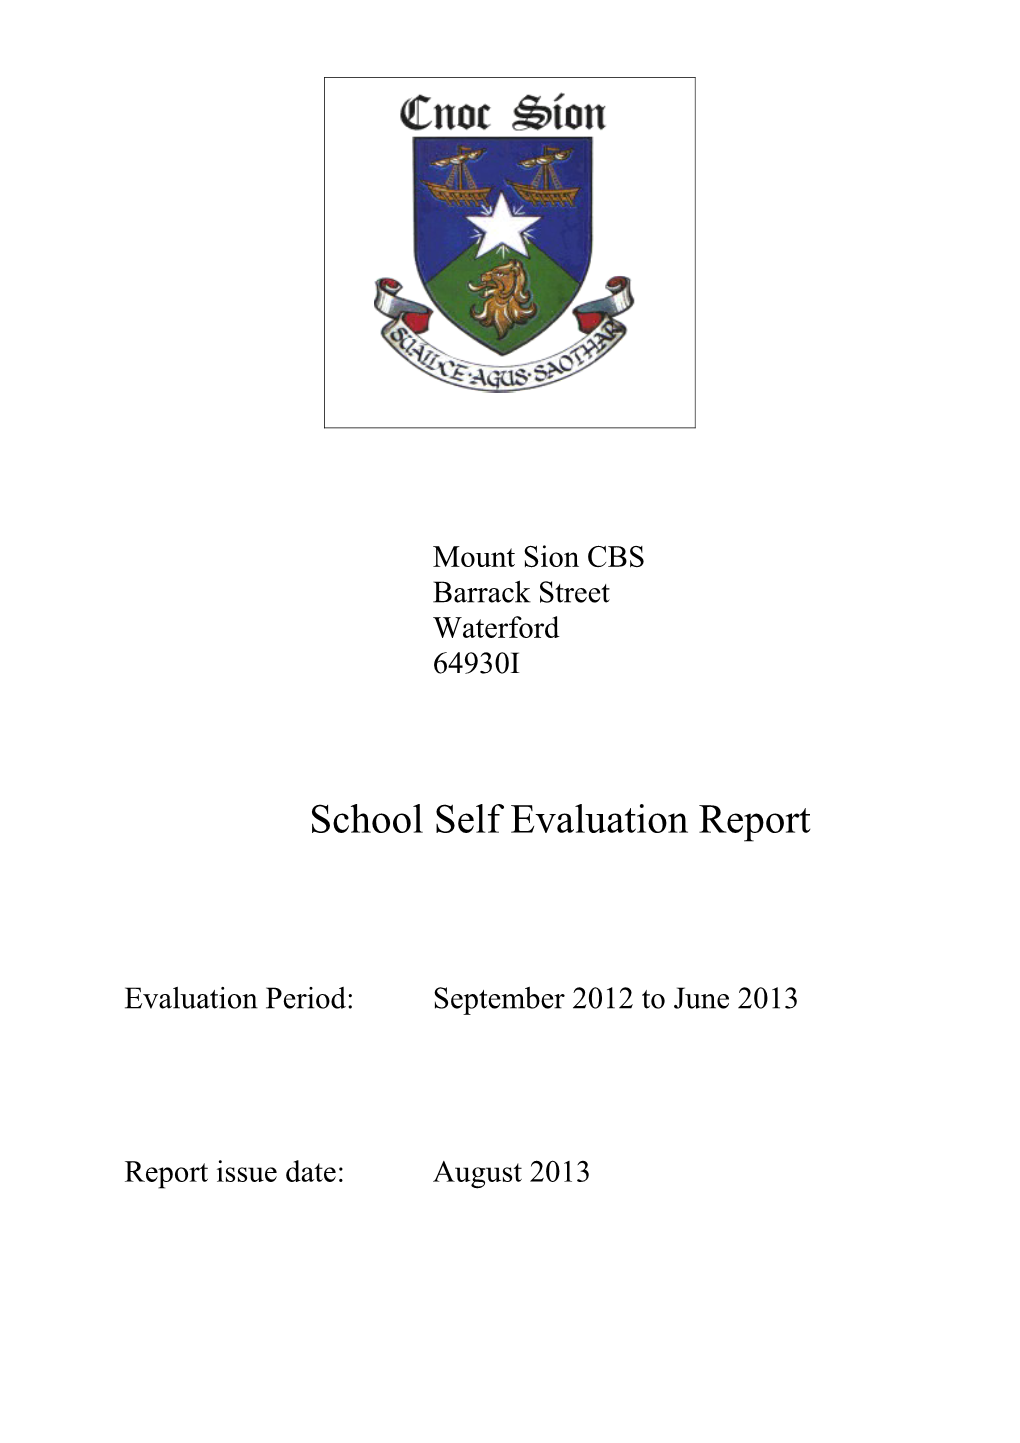 School Self Evaluation Report